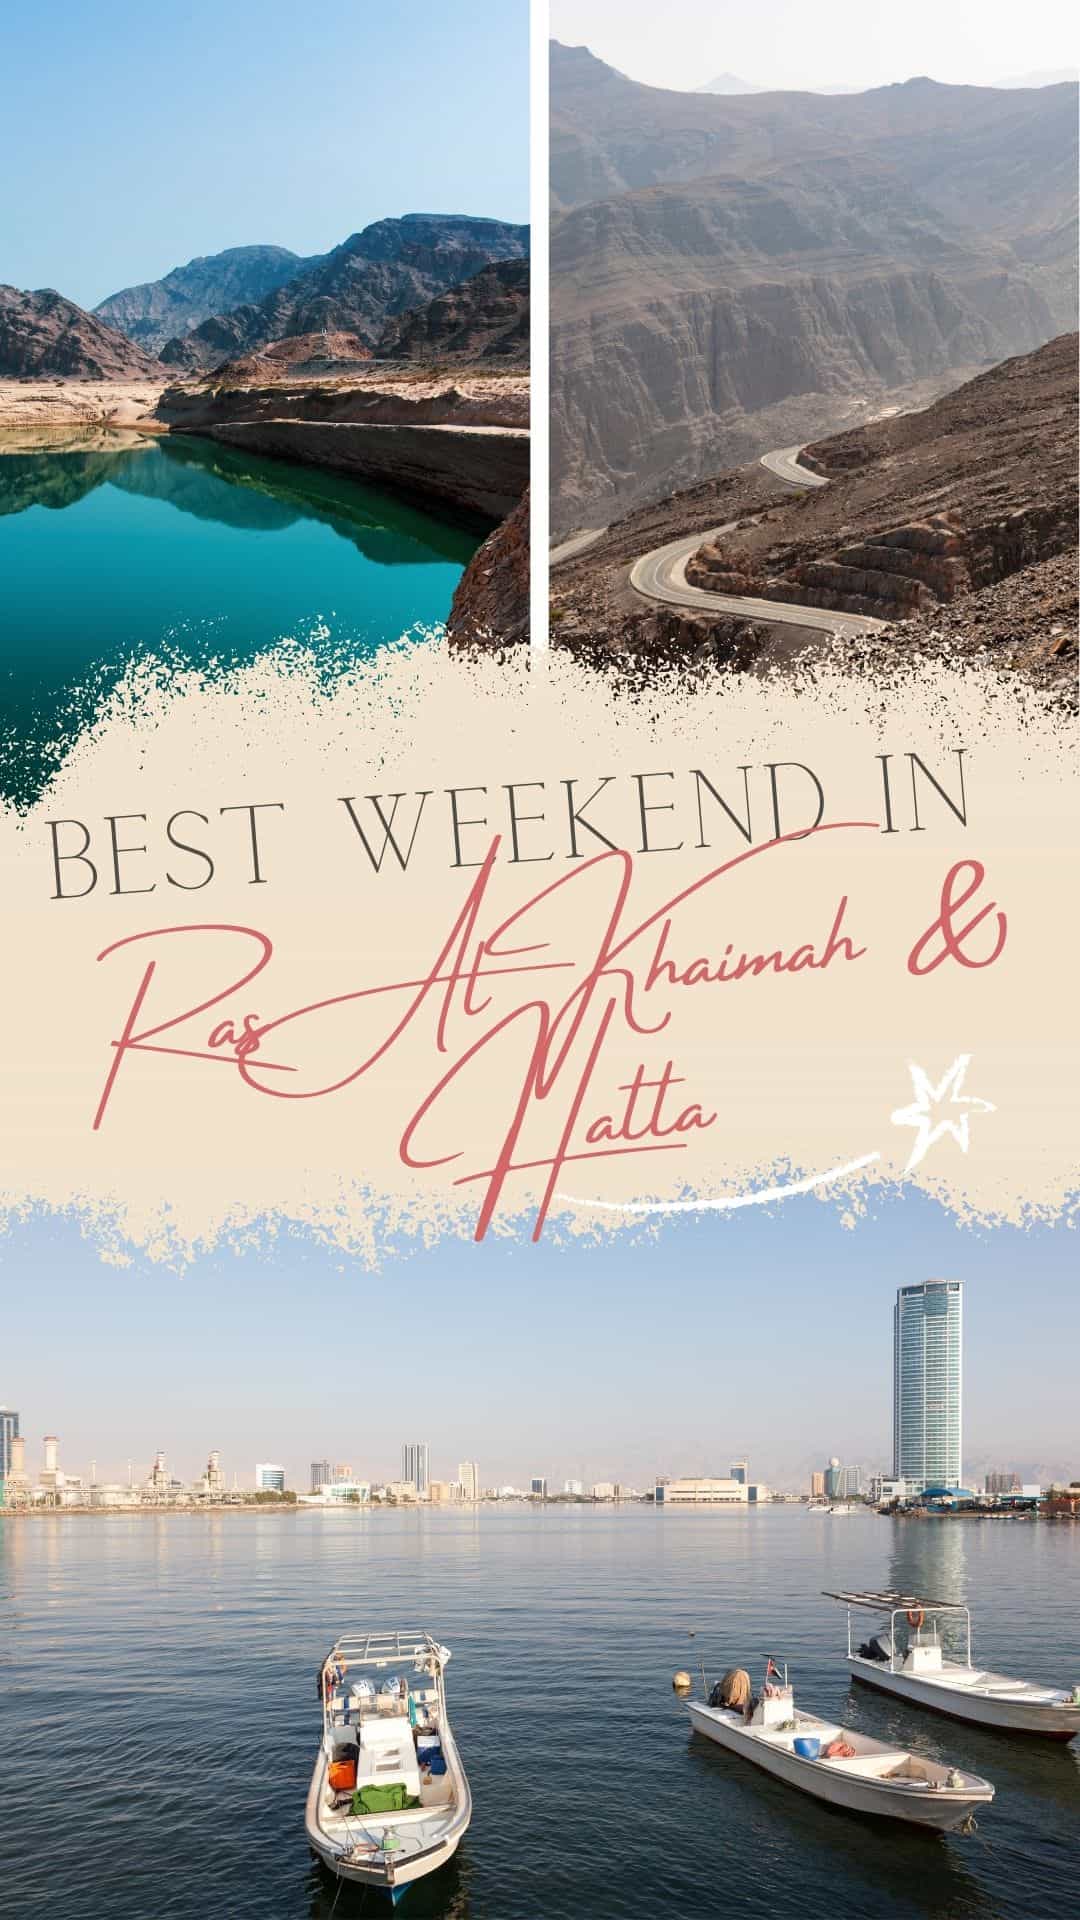 4 Days Itinerary on Ras Al Khaimah & Hatta